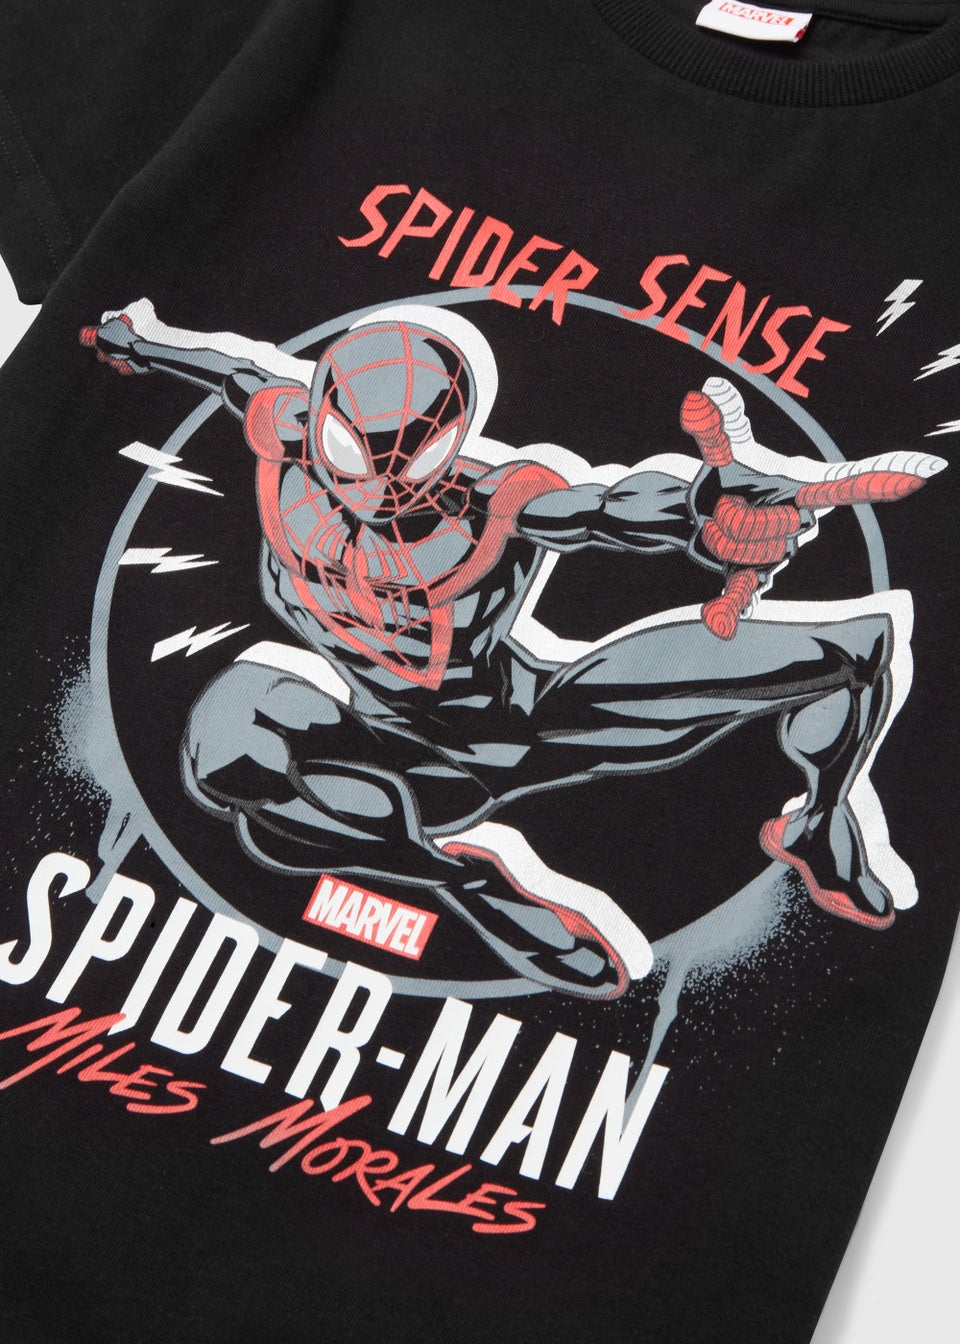 Kids Black Spider-Man Miles Morales Print T-Shirt (4-12yrs)